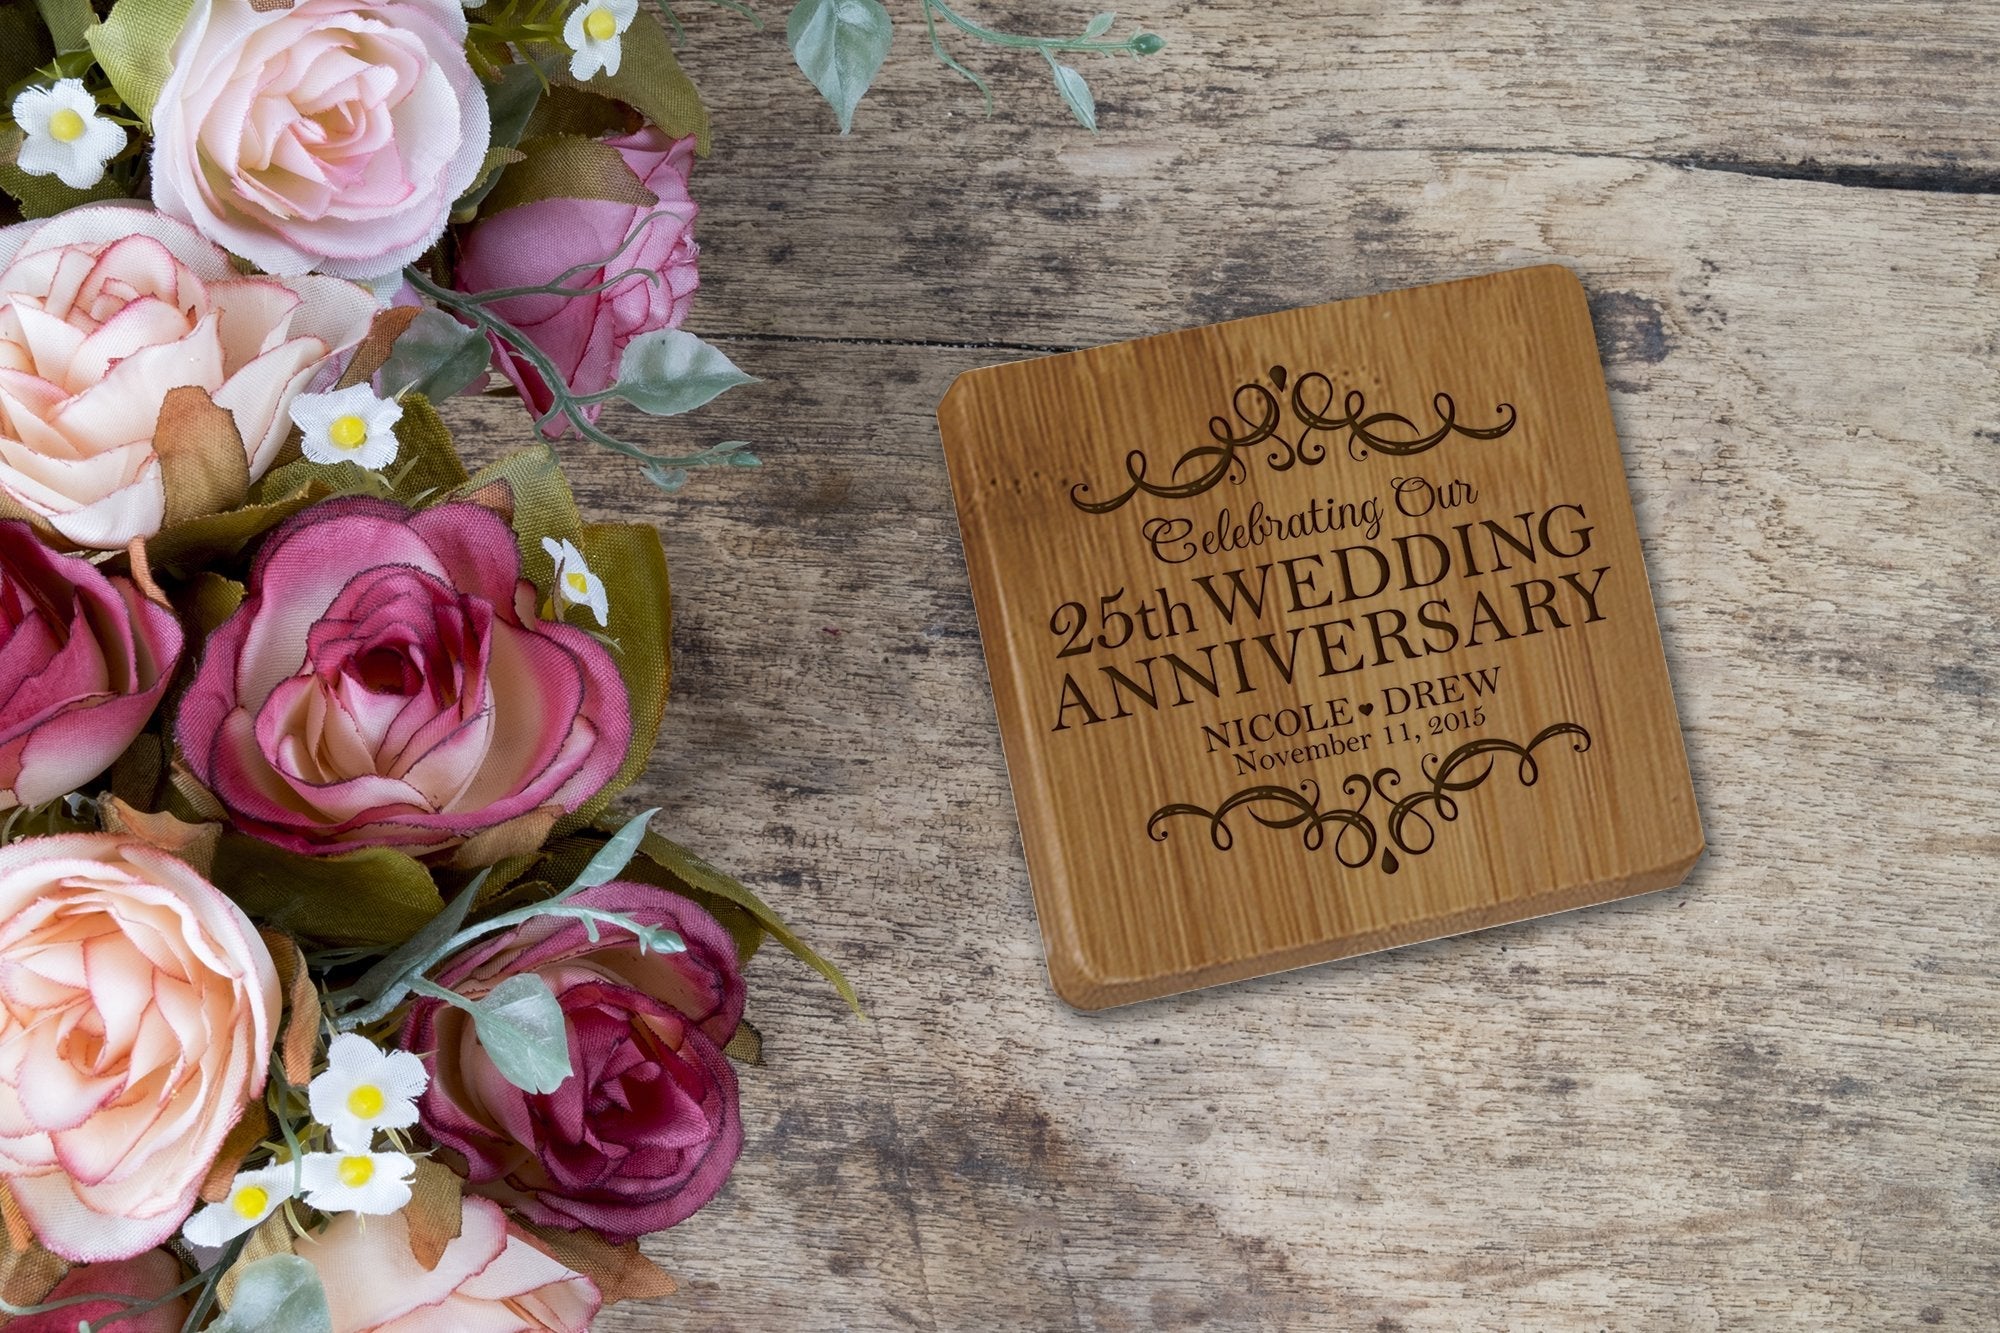 Personalized 25th Wedding Anniversary Bamboo 6pcs Coaster Set - LifeSong Milestones